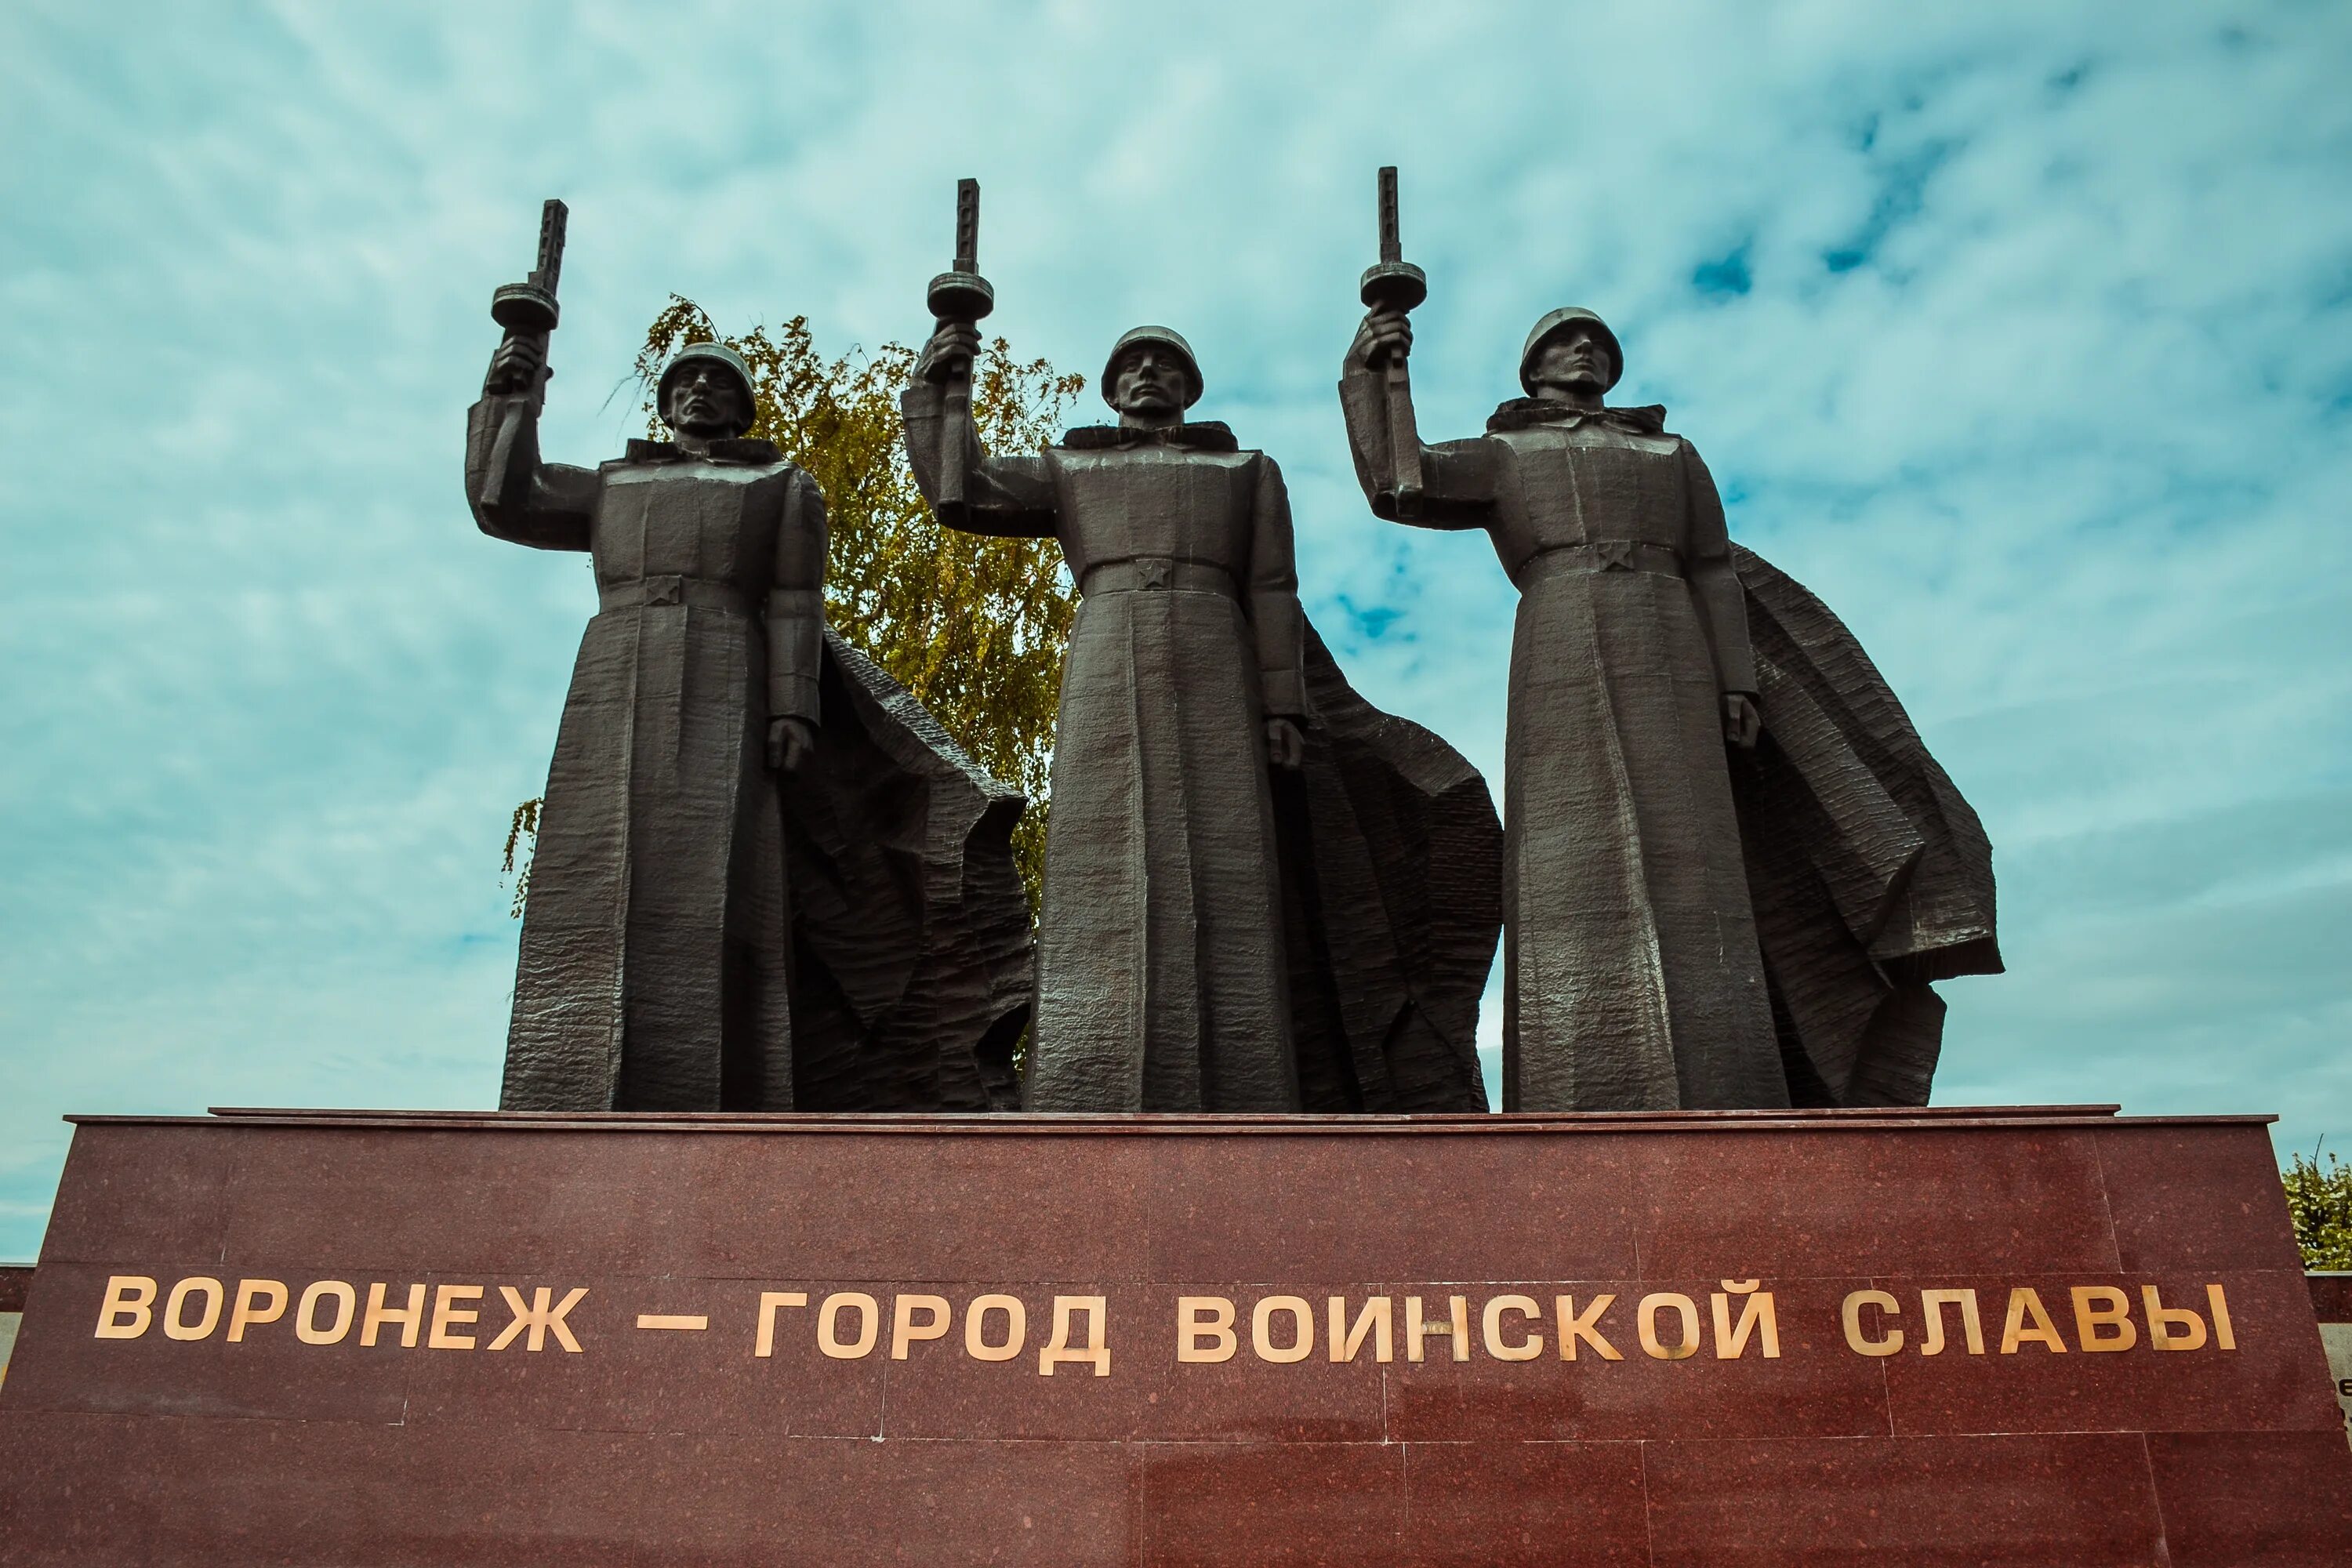 Monument of glory voronezh #25